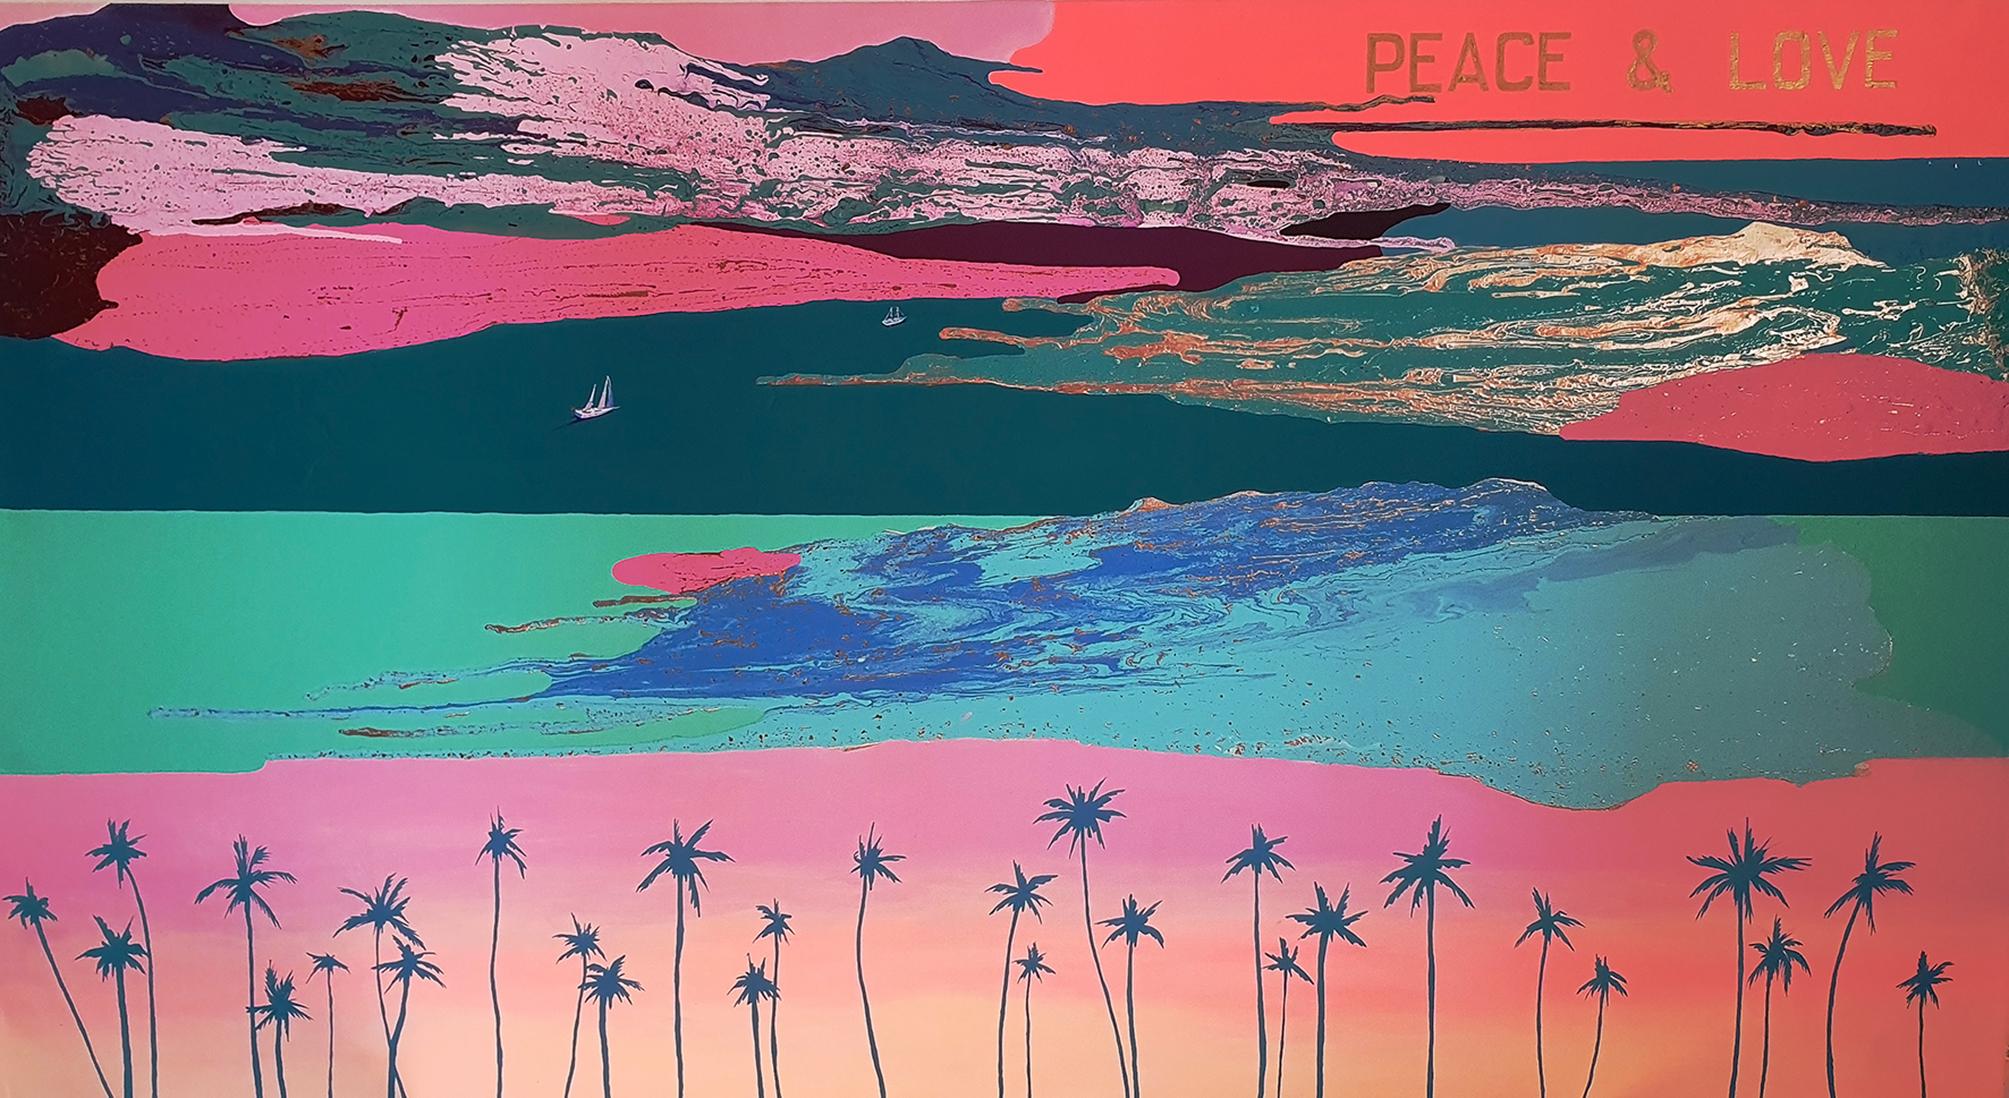 "PEACE & LOVE" Mixed Media Painting 42.5" x 76" inch by Masha Iv